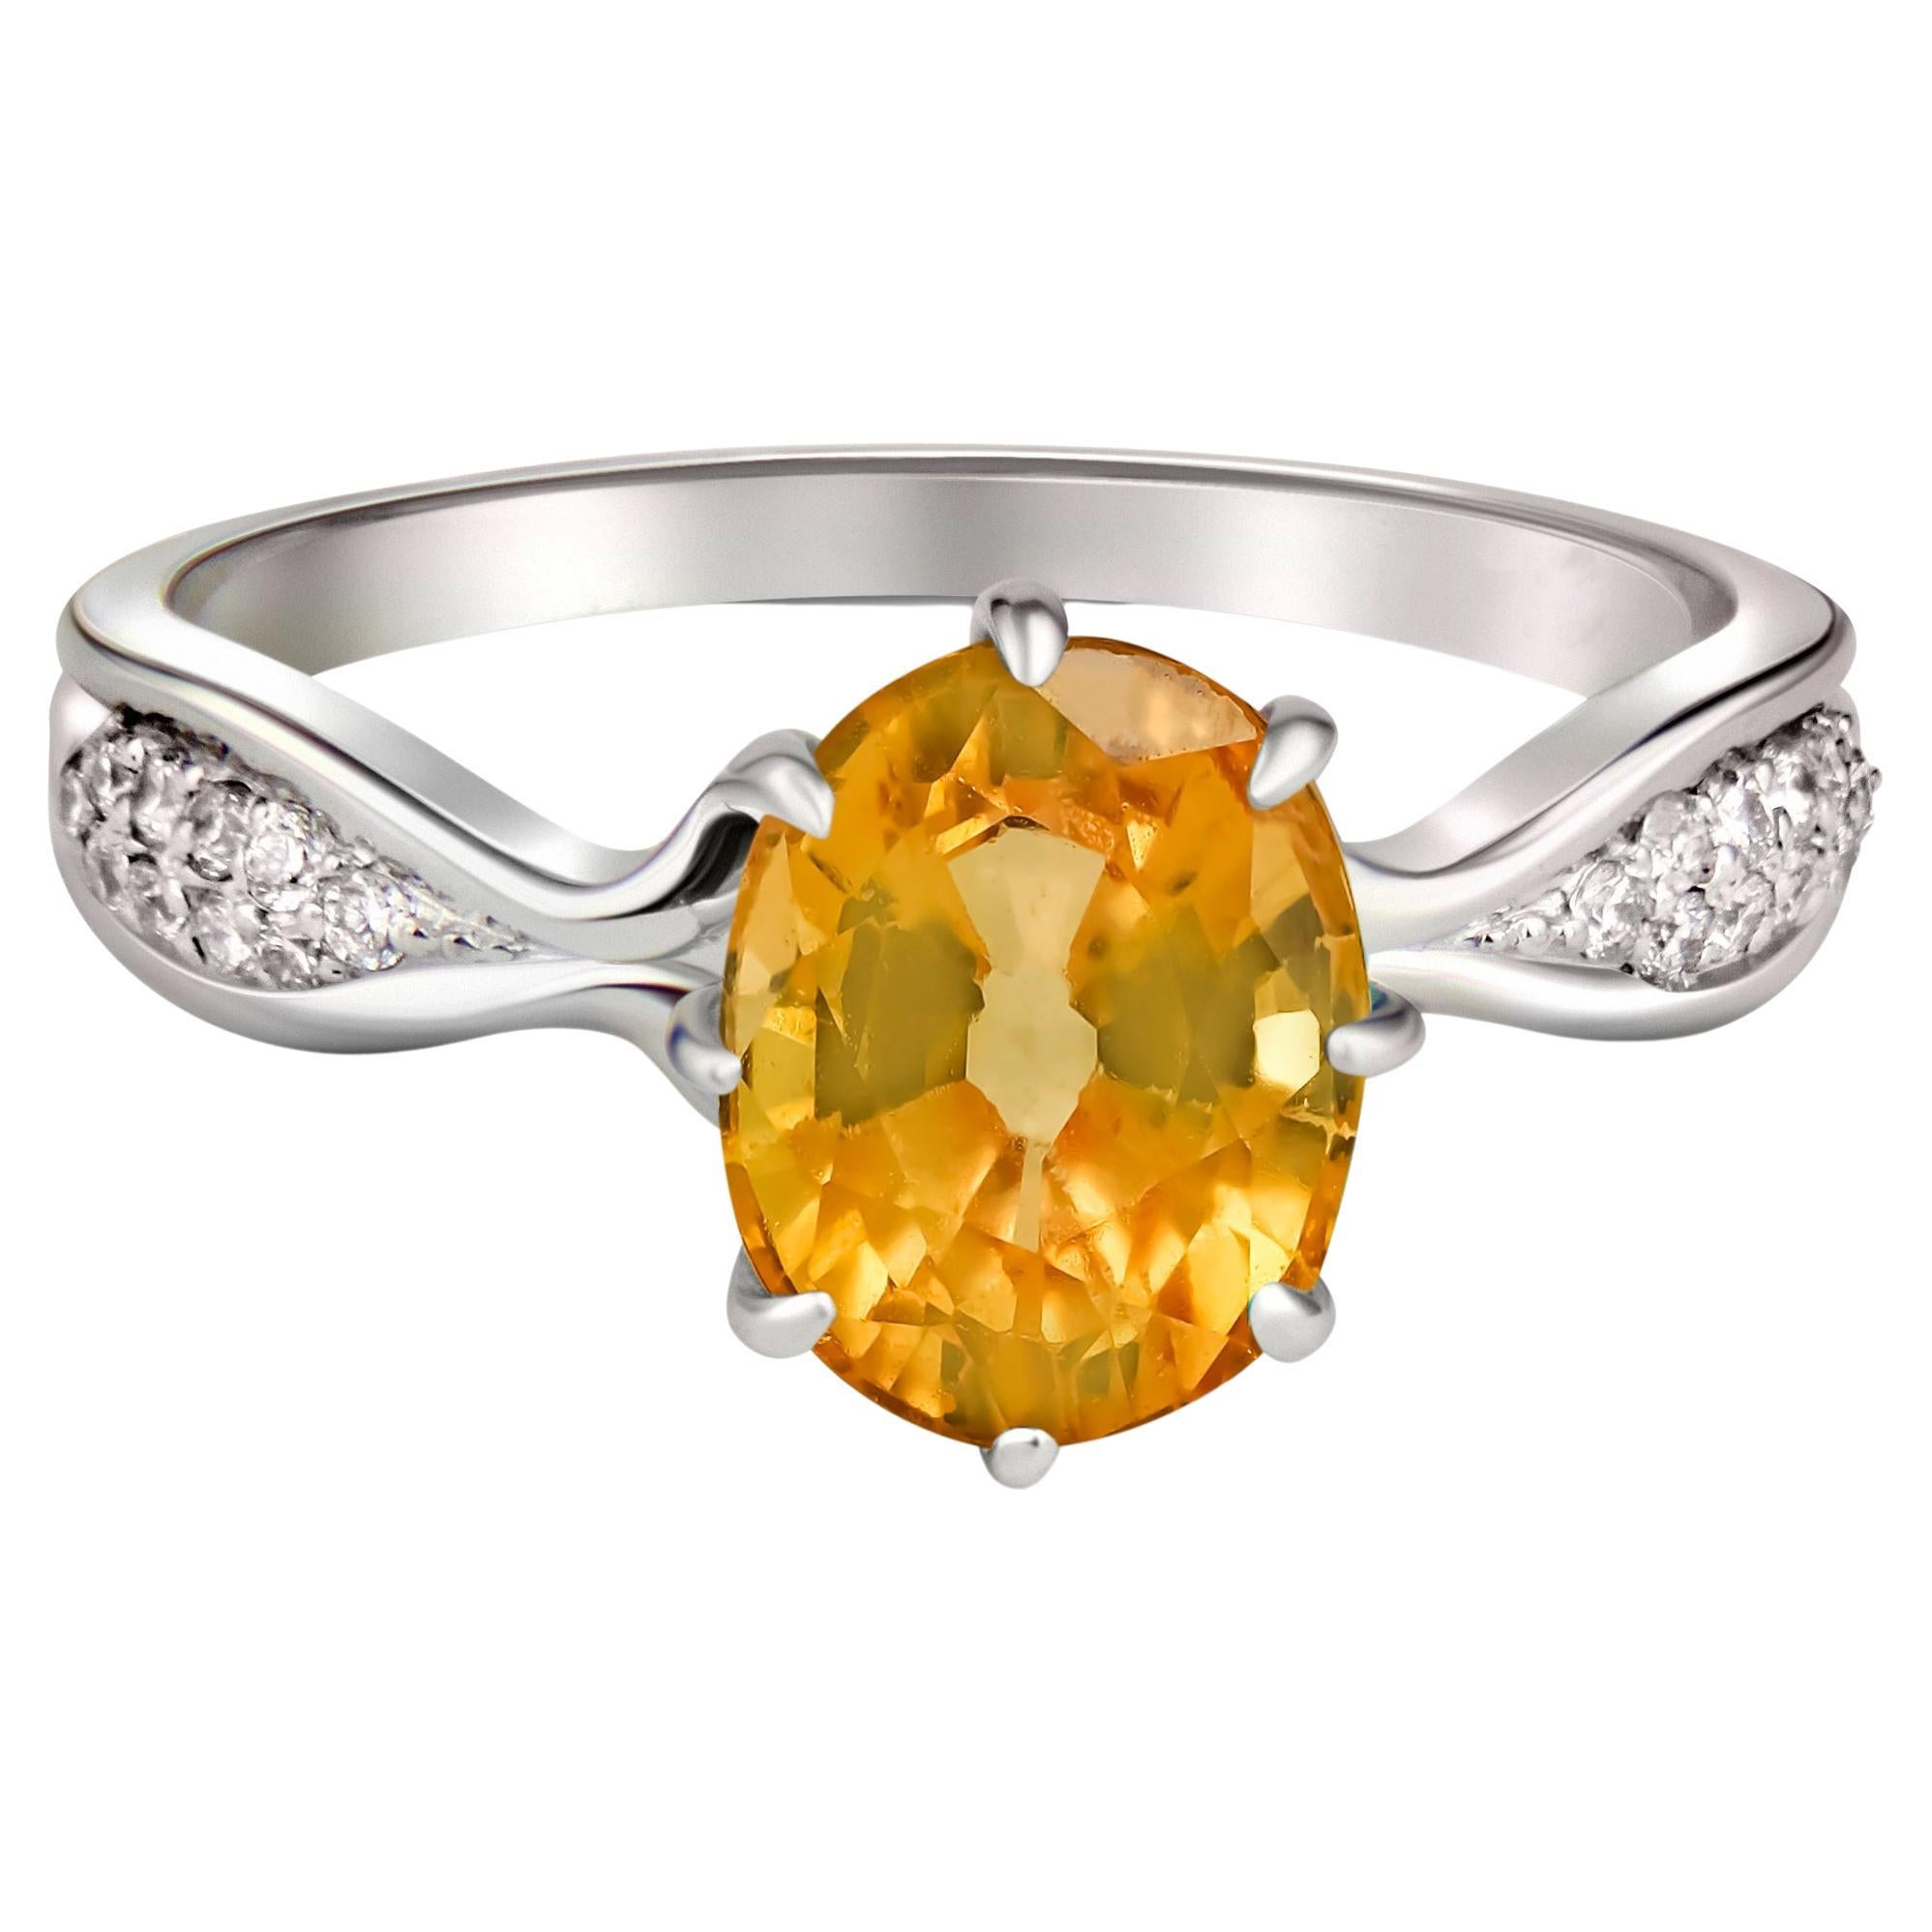 Saphir-Ring aus 14k Gold, ovaler Saphir, Saphir-Goldring